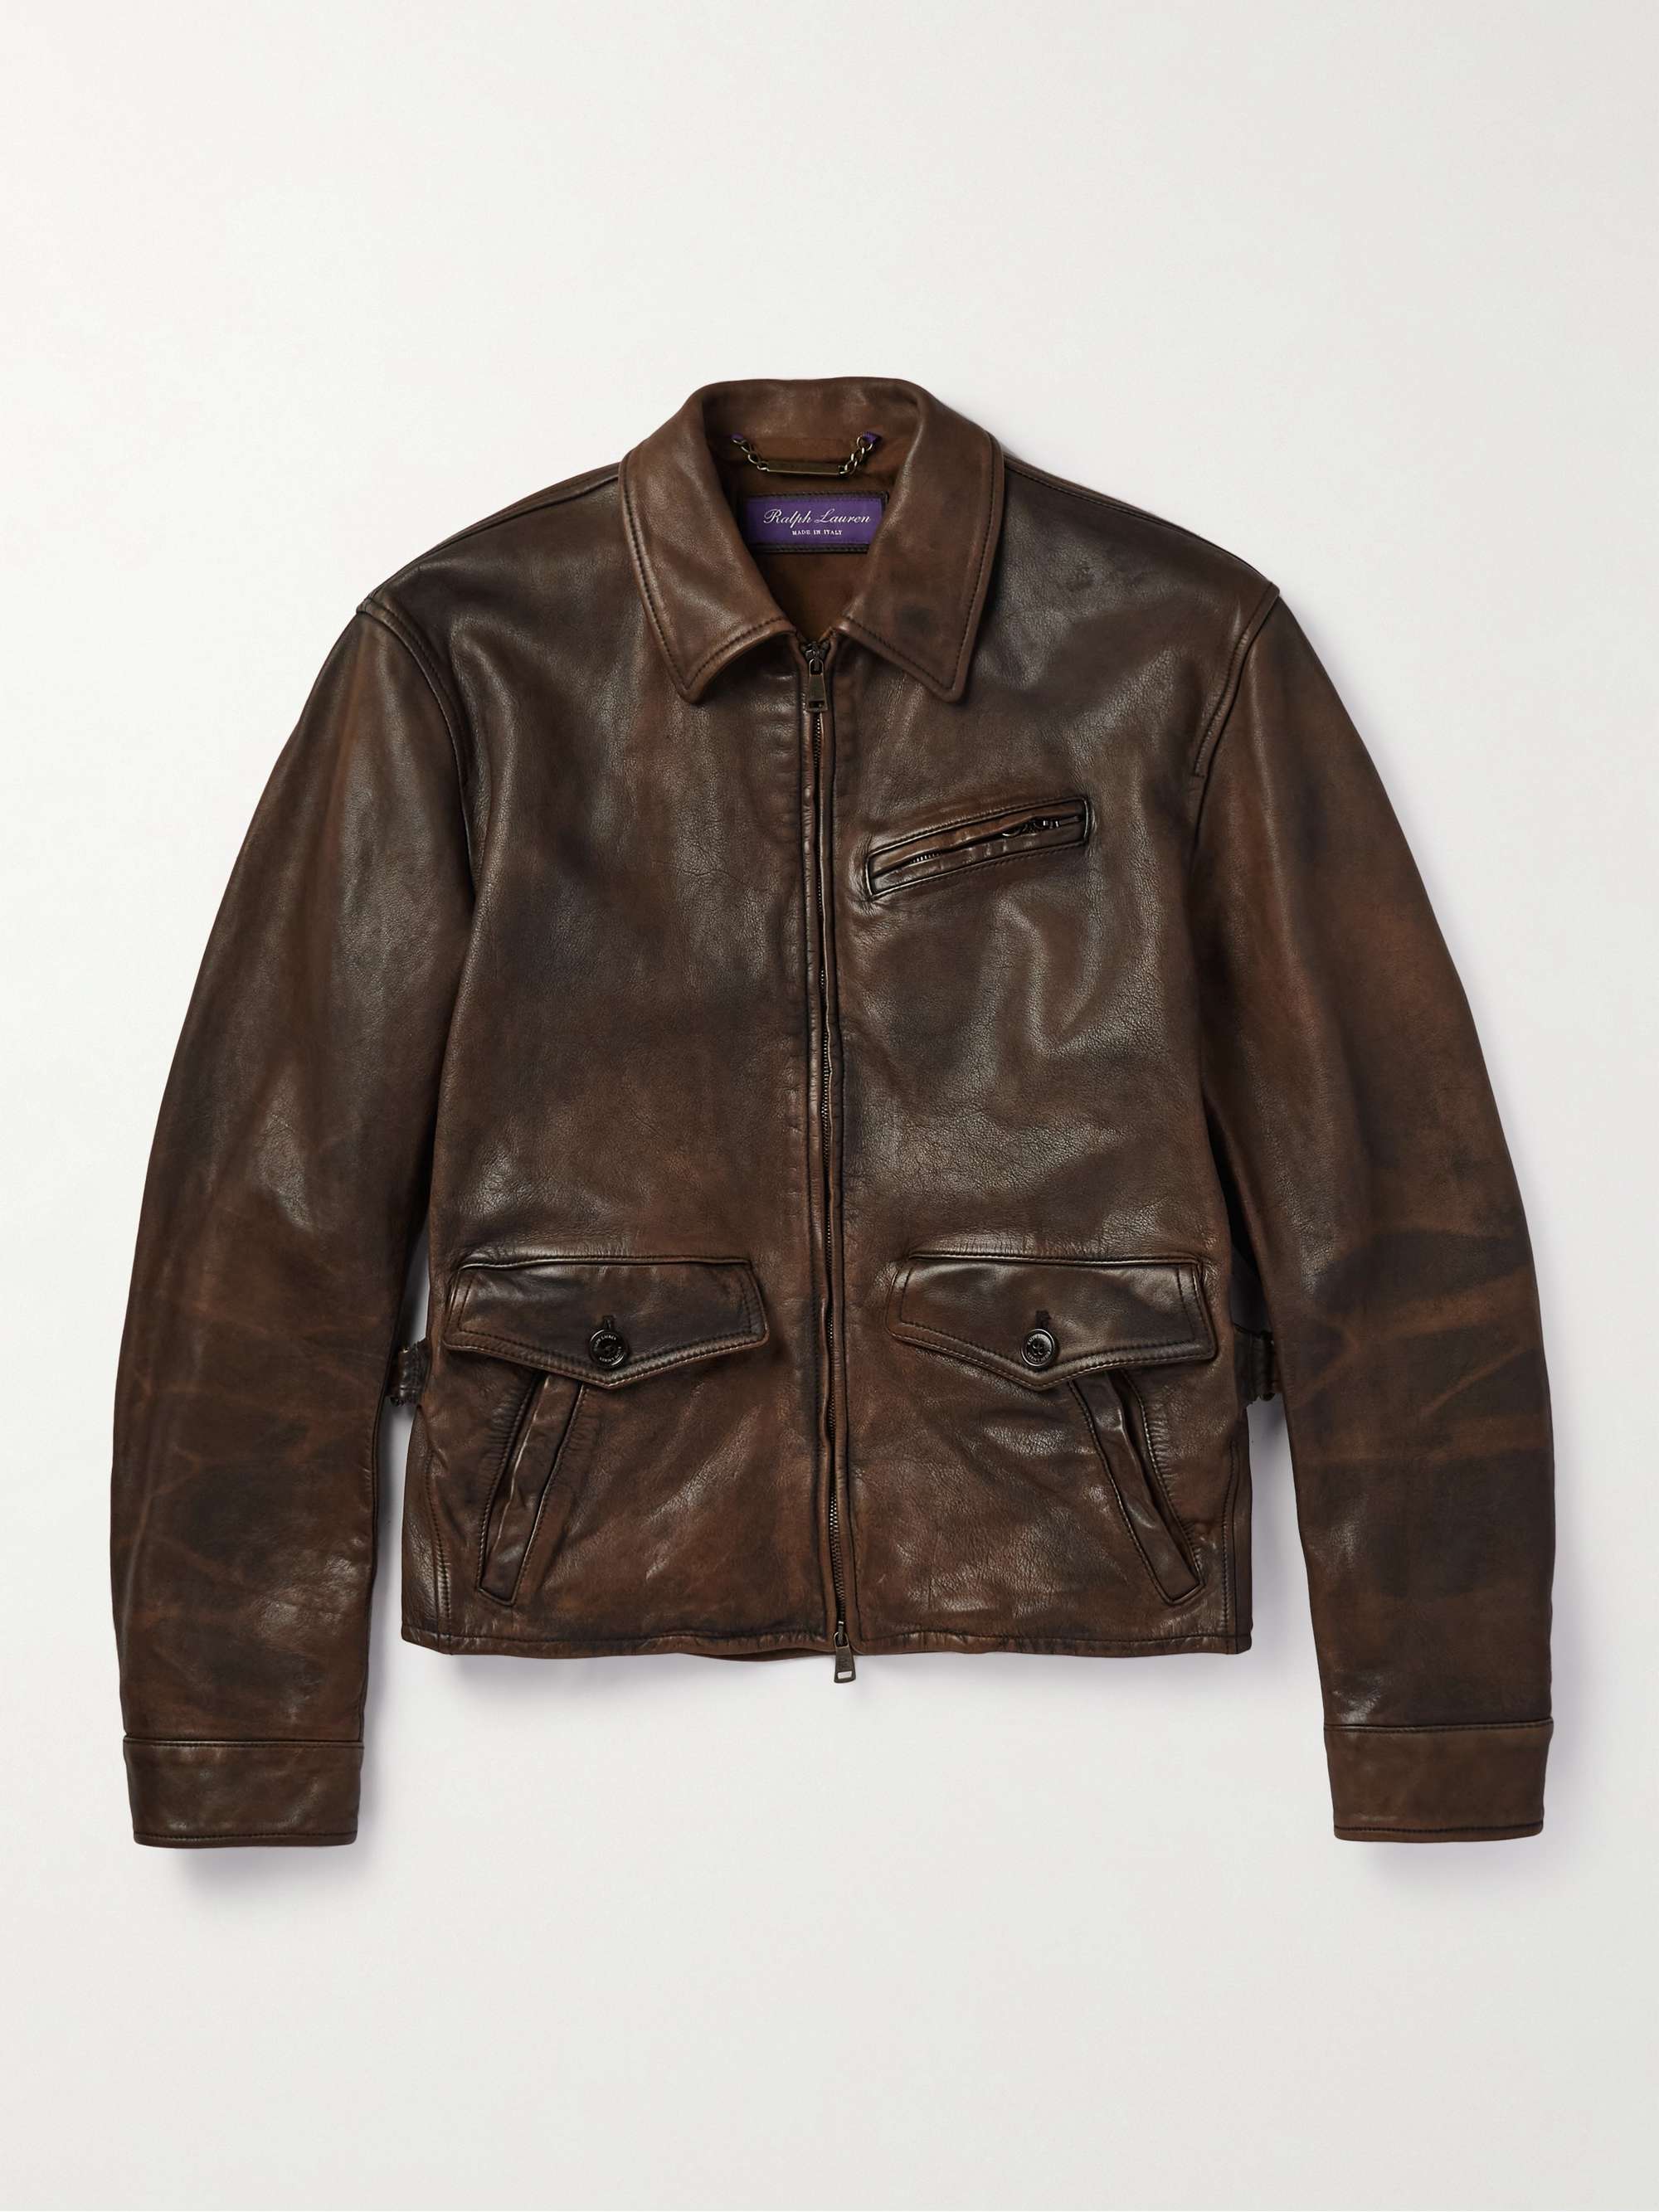 RALPH LAUREN PURPLE LABEL Hugh Leather Jacket